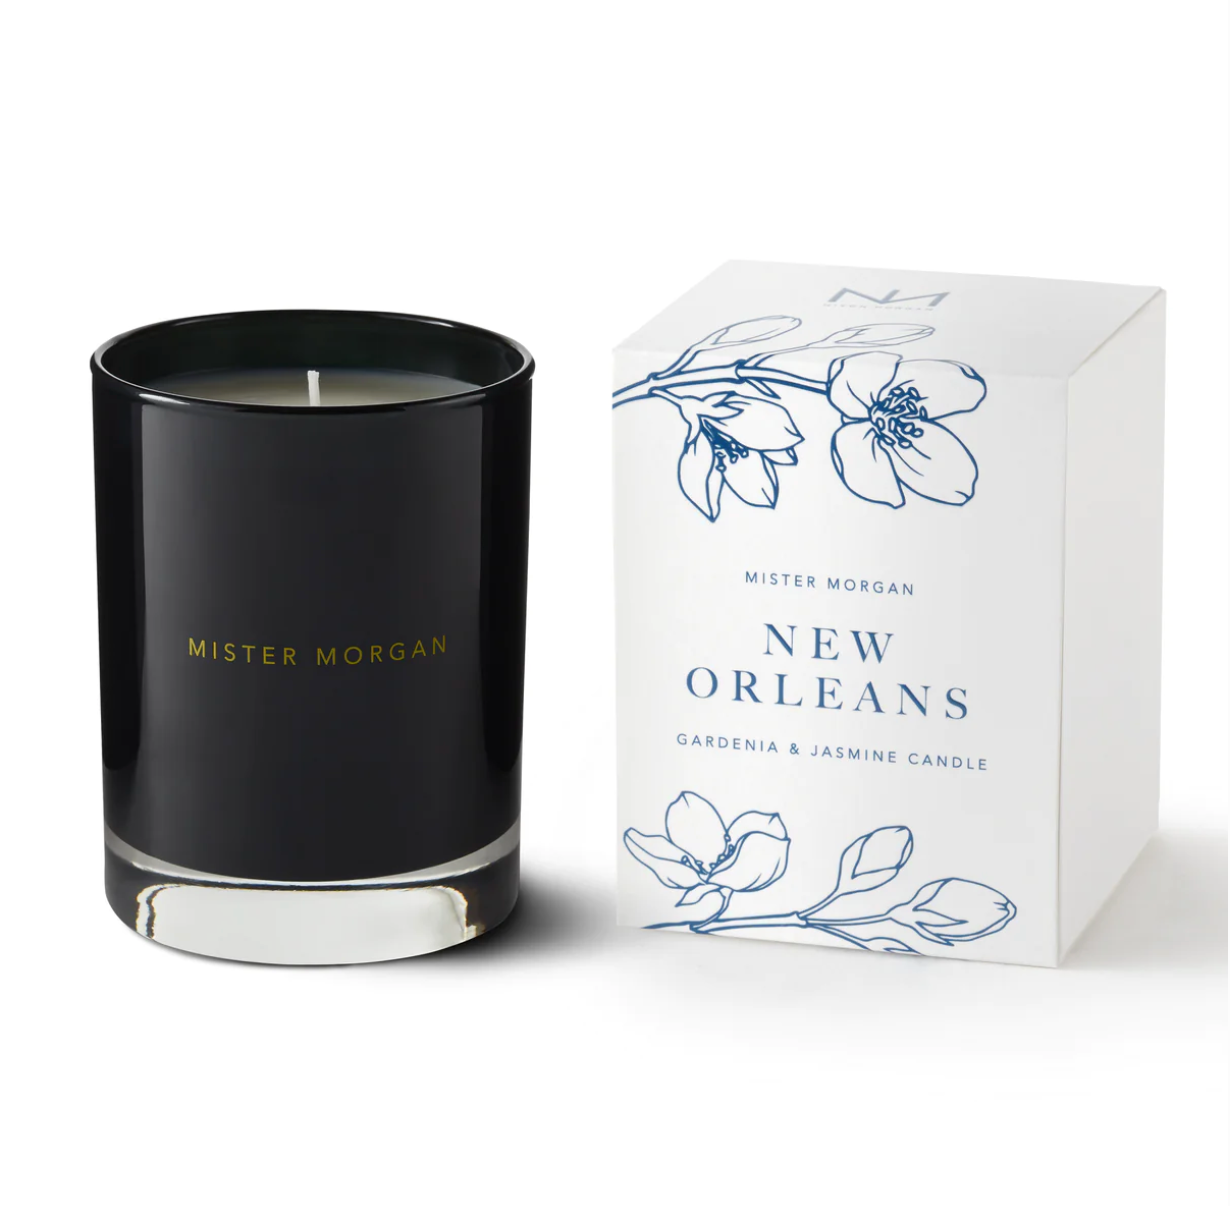 New Orleans Gardenia & Jasmine Candle